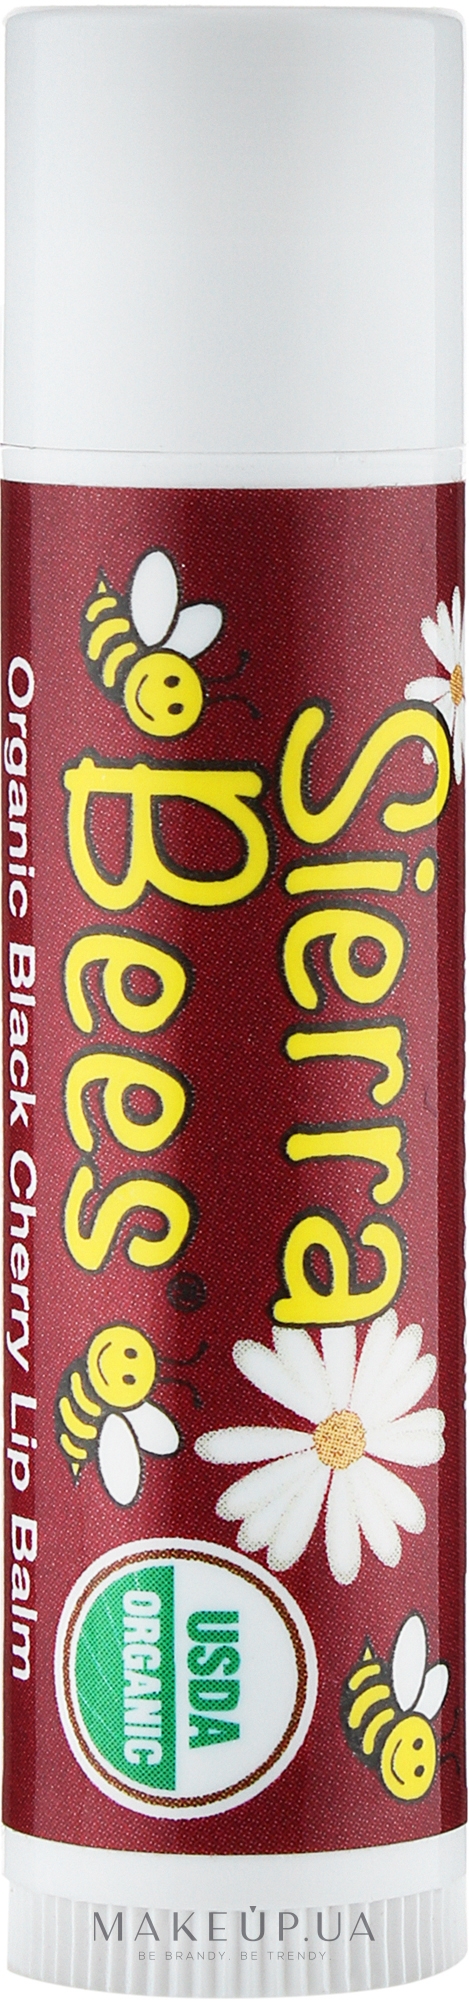 Бальзам для губ органический "Черная вишня" - Sierra Bees Black Cherry Organic Lip Balm — фото 4.25g